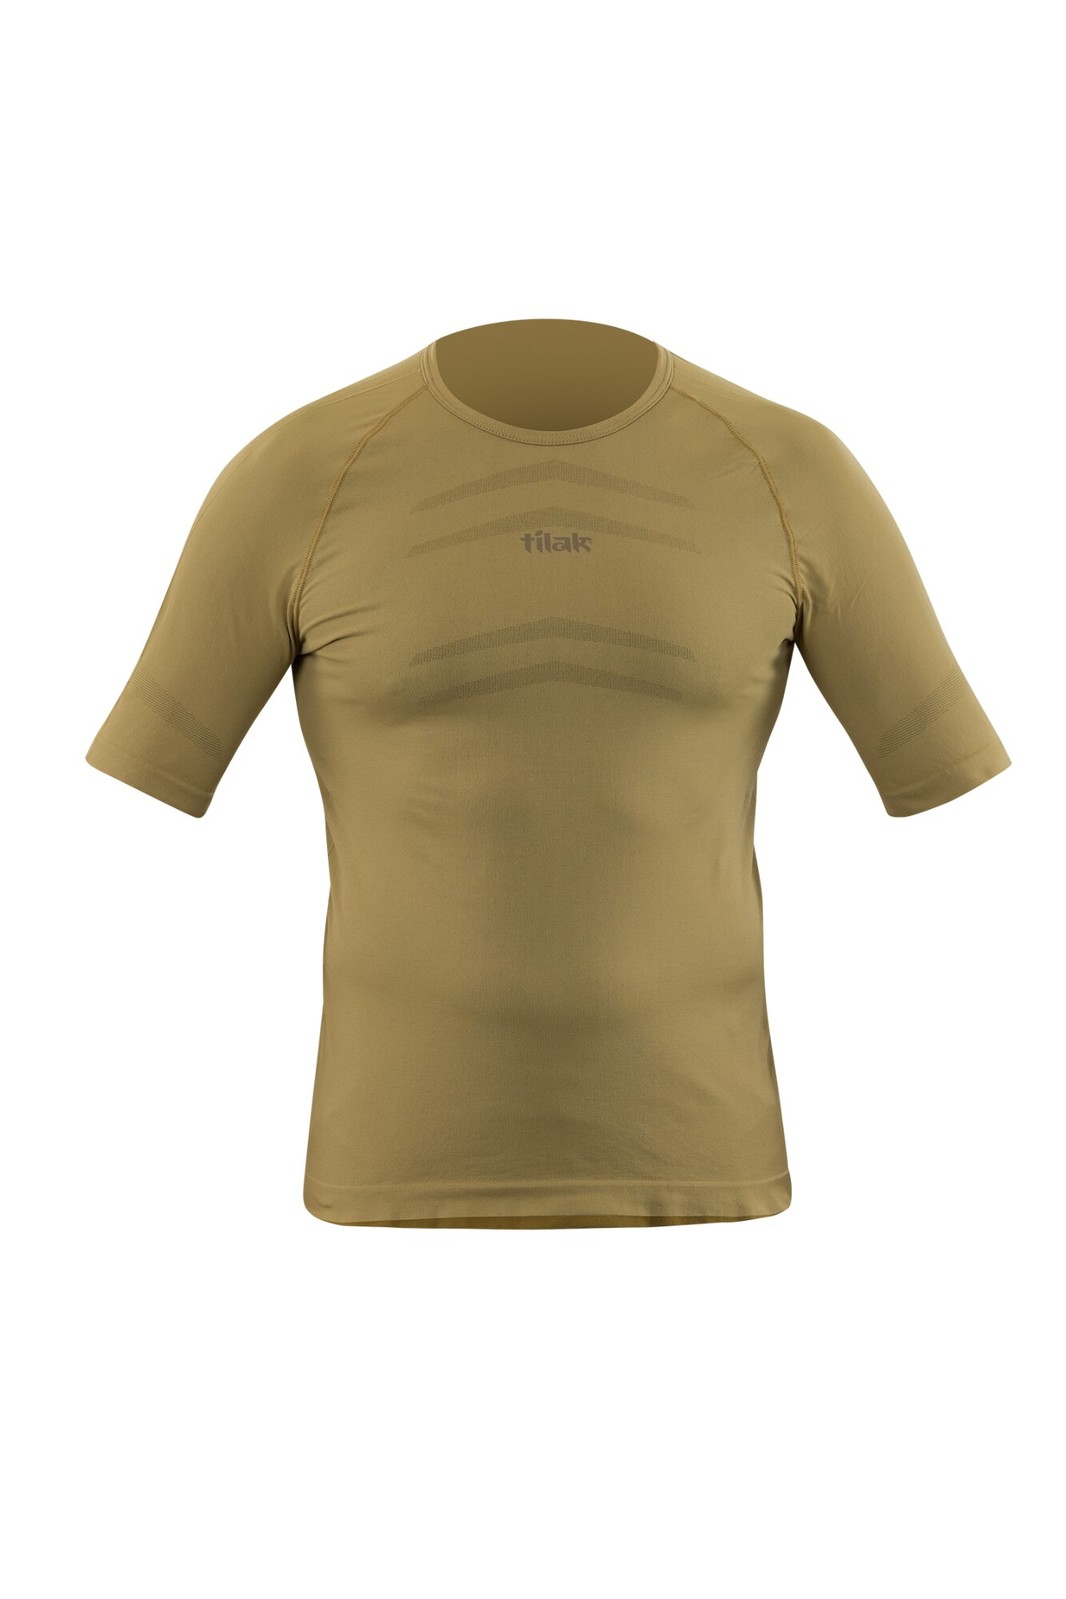 Triko Ultralite Tilak Military Gear® – Tan (Barva: Tan, Velikost: L/XL)